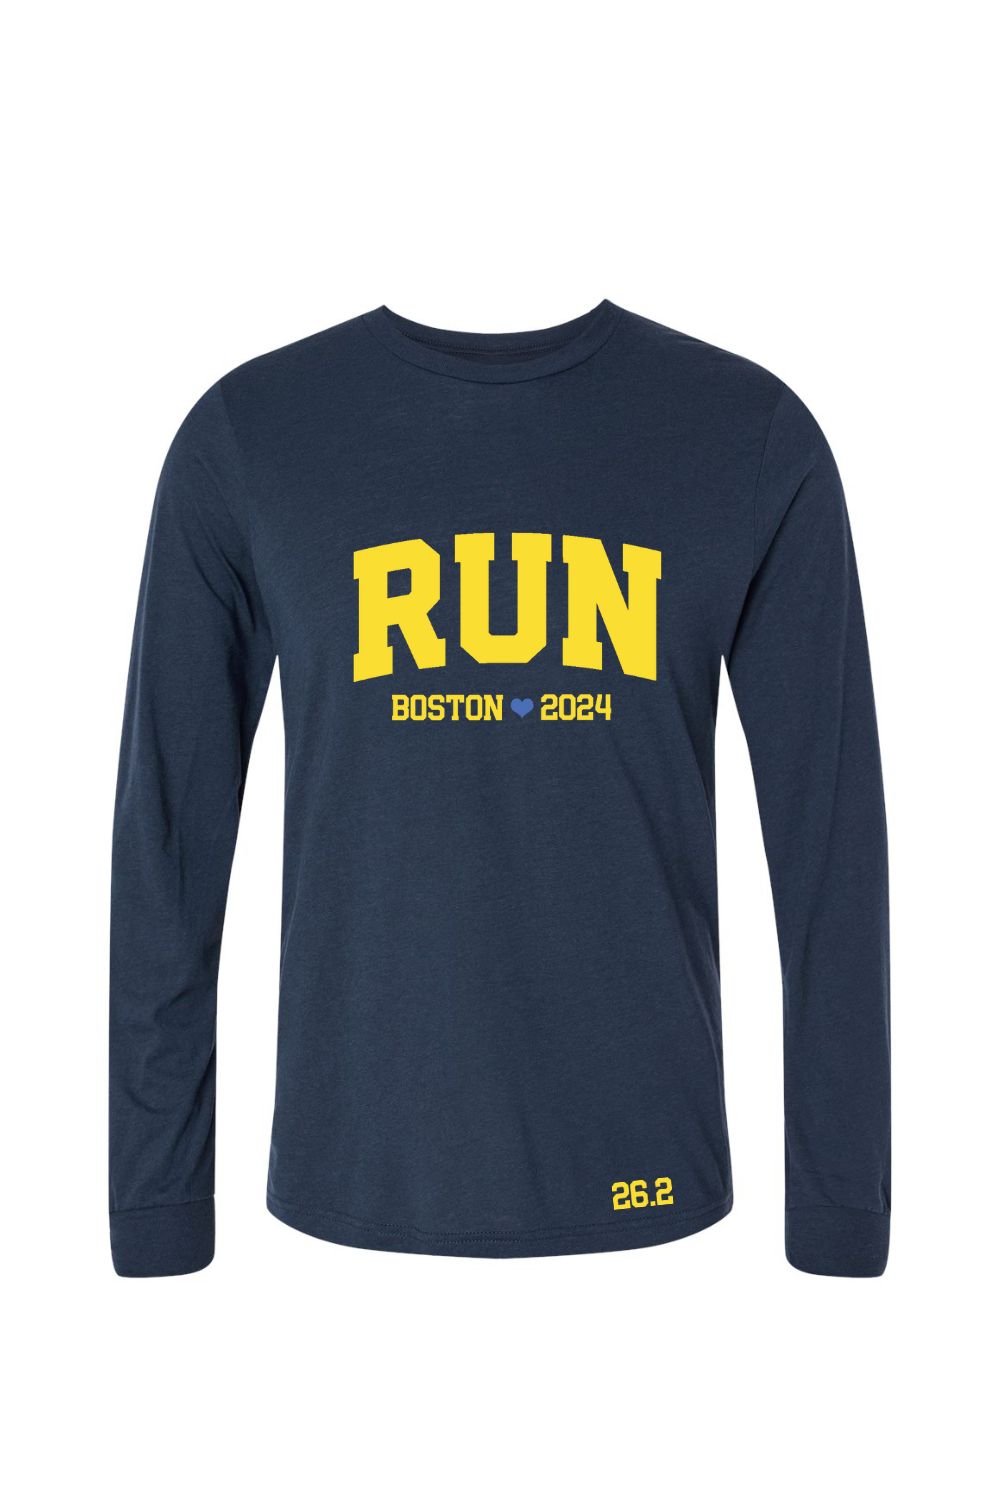 Run Boston 2024 Long Sleeve